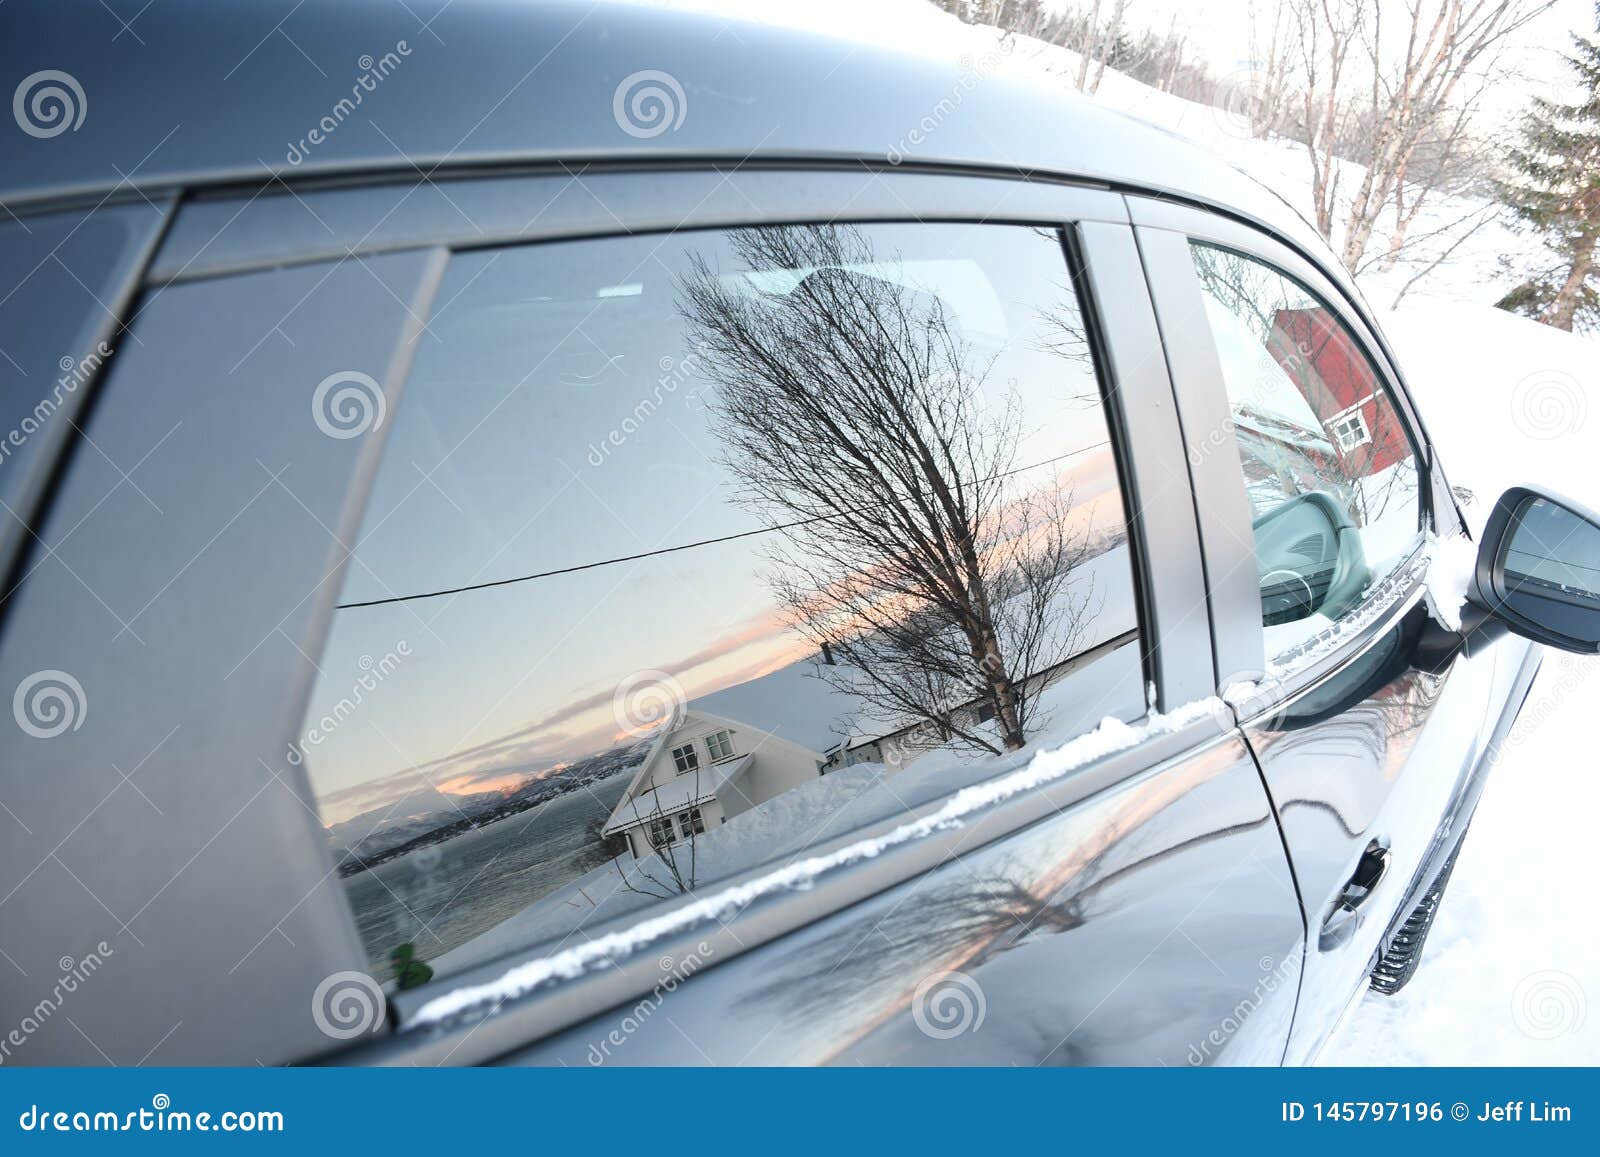 Beautiful Scene Reflected on Car Window Stock Photo - Image of black,  winter: 145797196